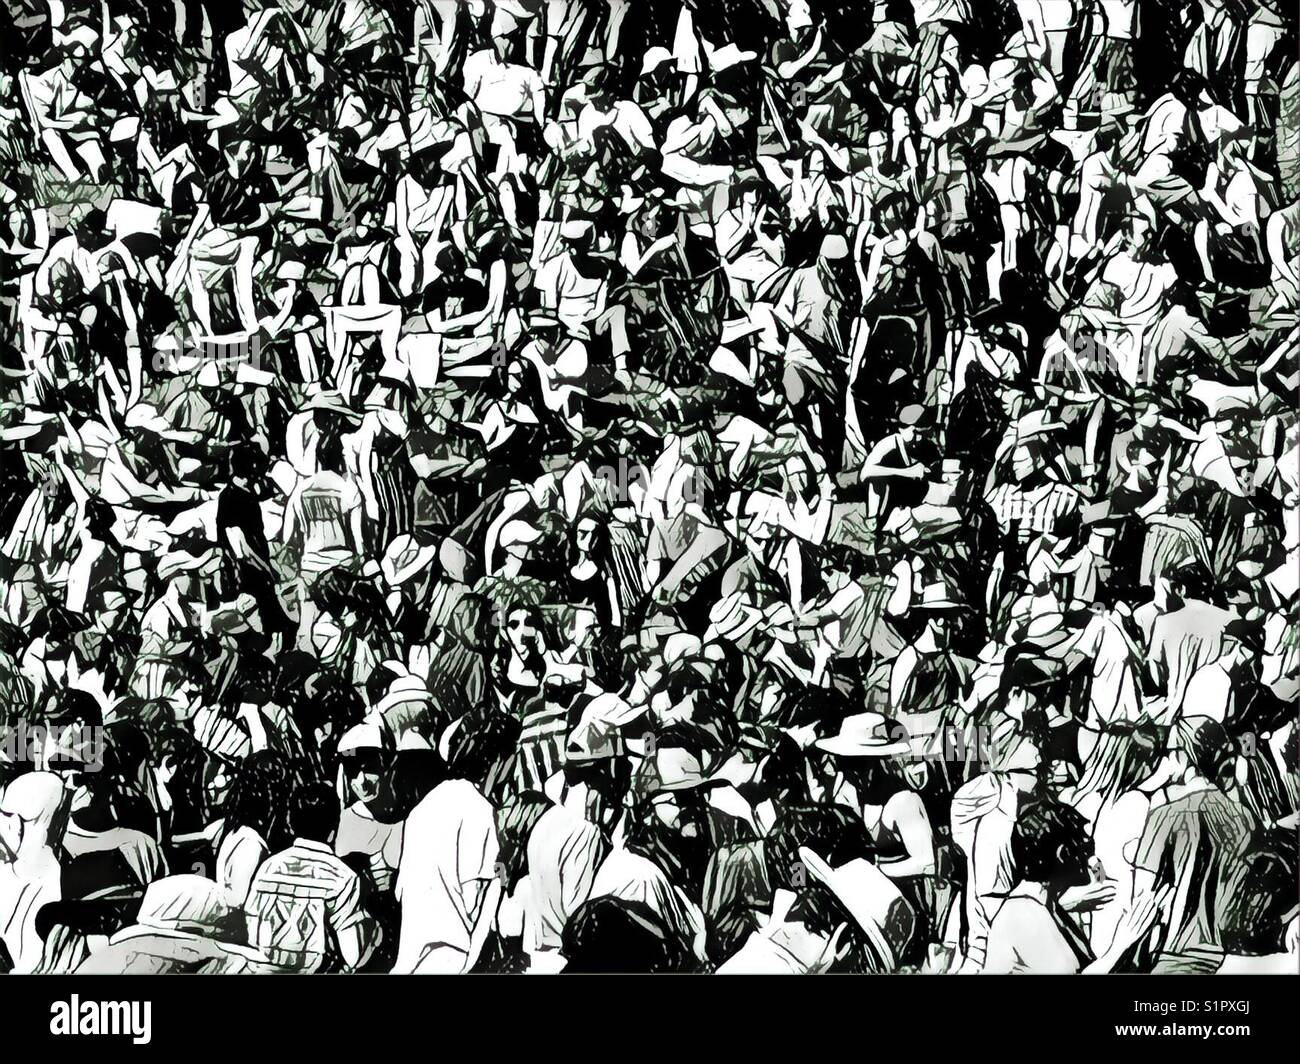 Large crowd scene Stock Photo